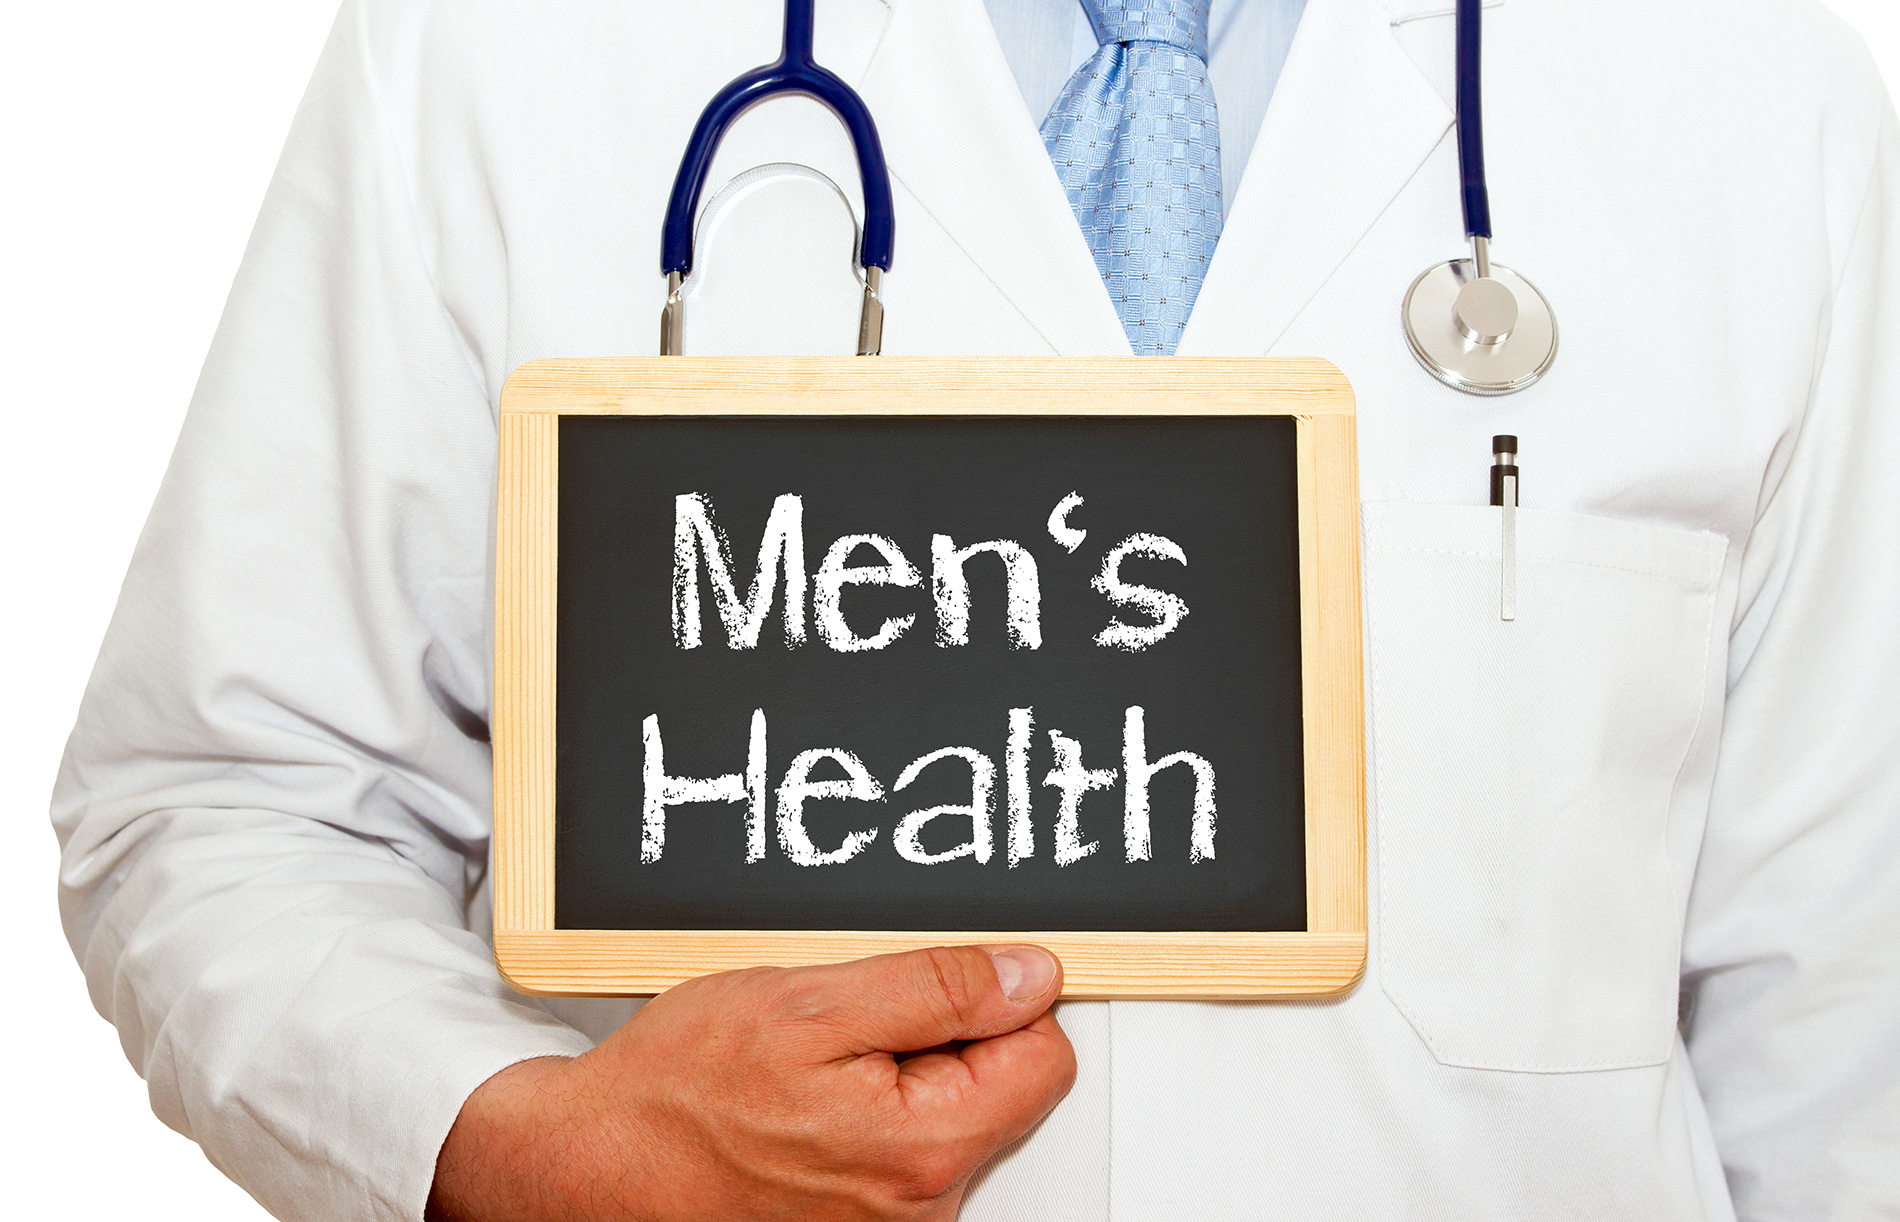 Doctor's holding chalkboard that reads "Men's Health'